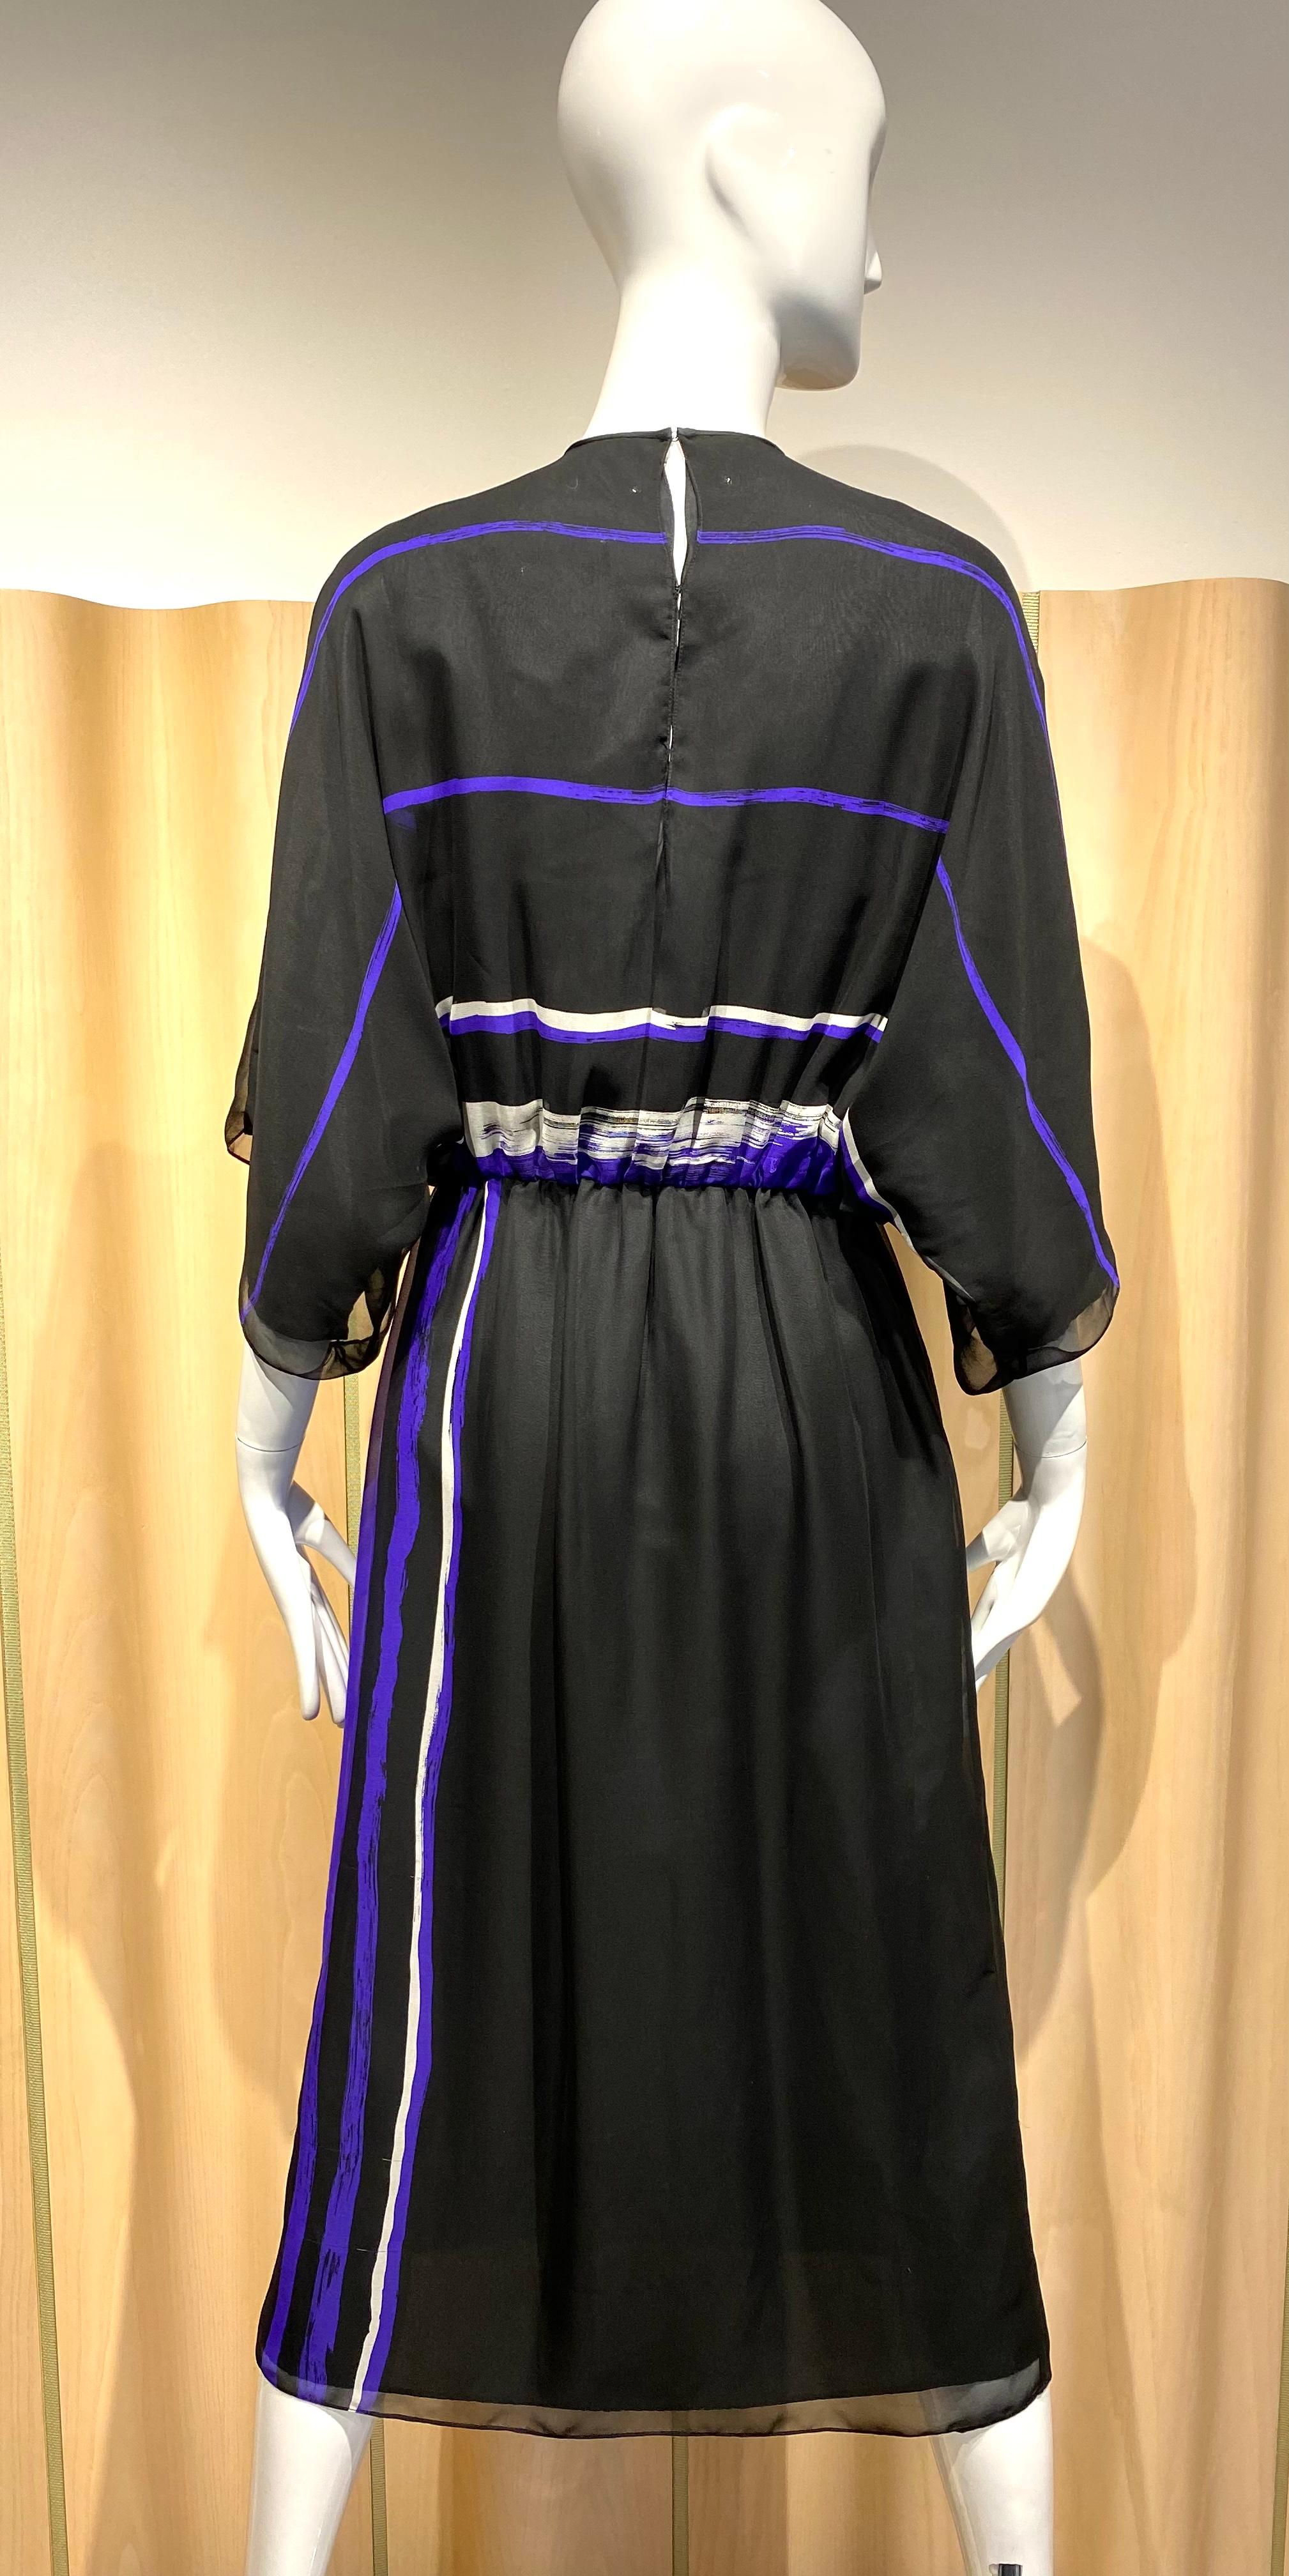 1970s Hanae Mori black and purple crepe dress with sash.
Size Medium
Elastic waist.  Dress fit size 2/4/6